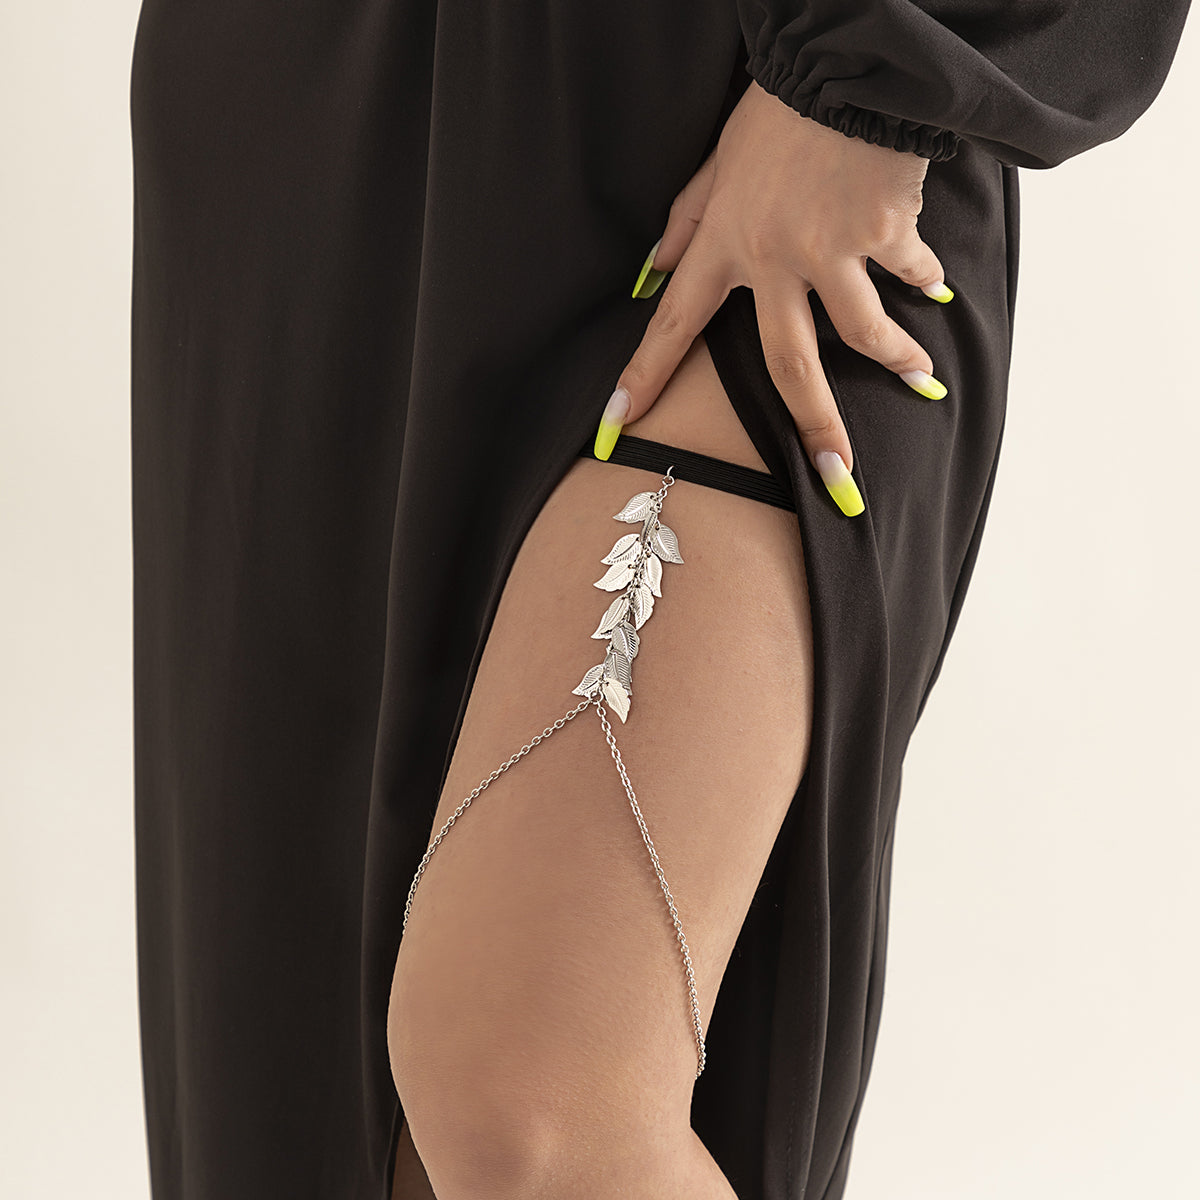 Nylon & Silver-Plated Leaf Leg Chain